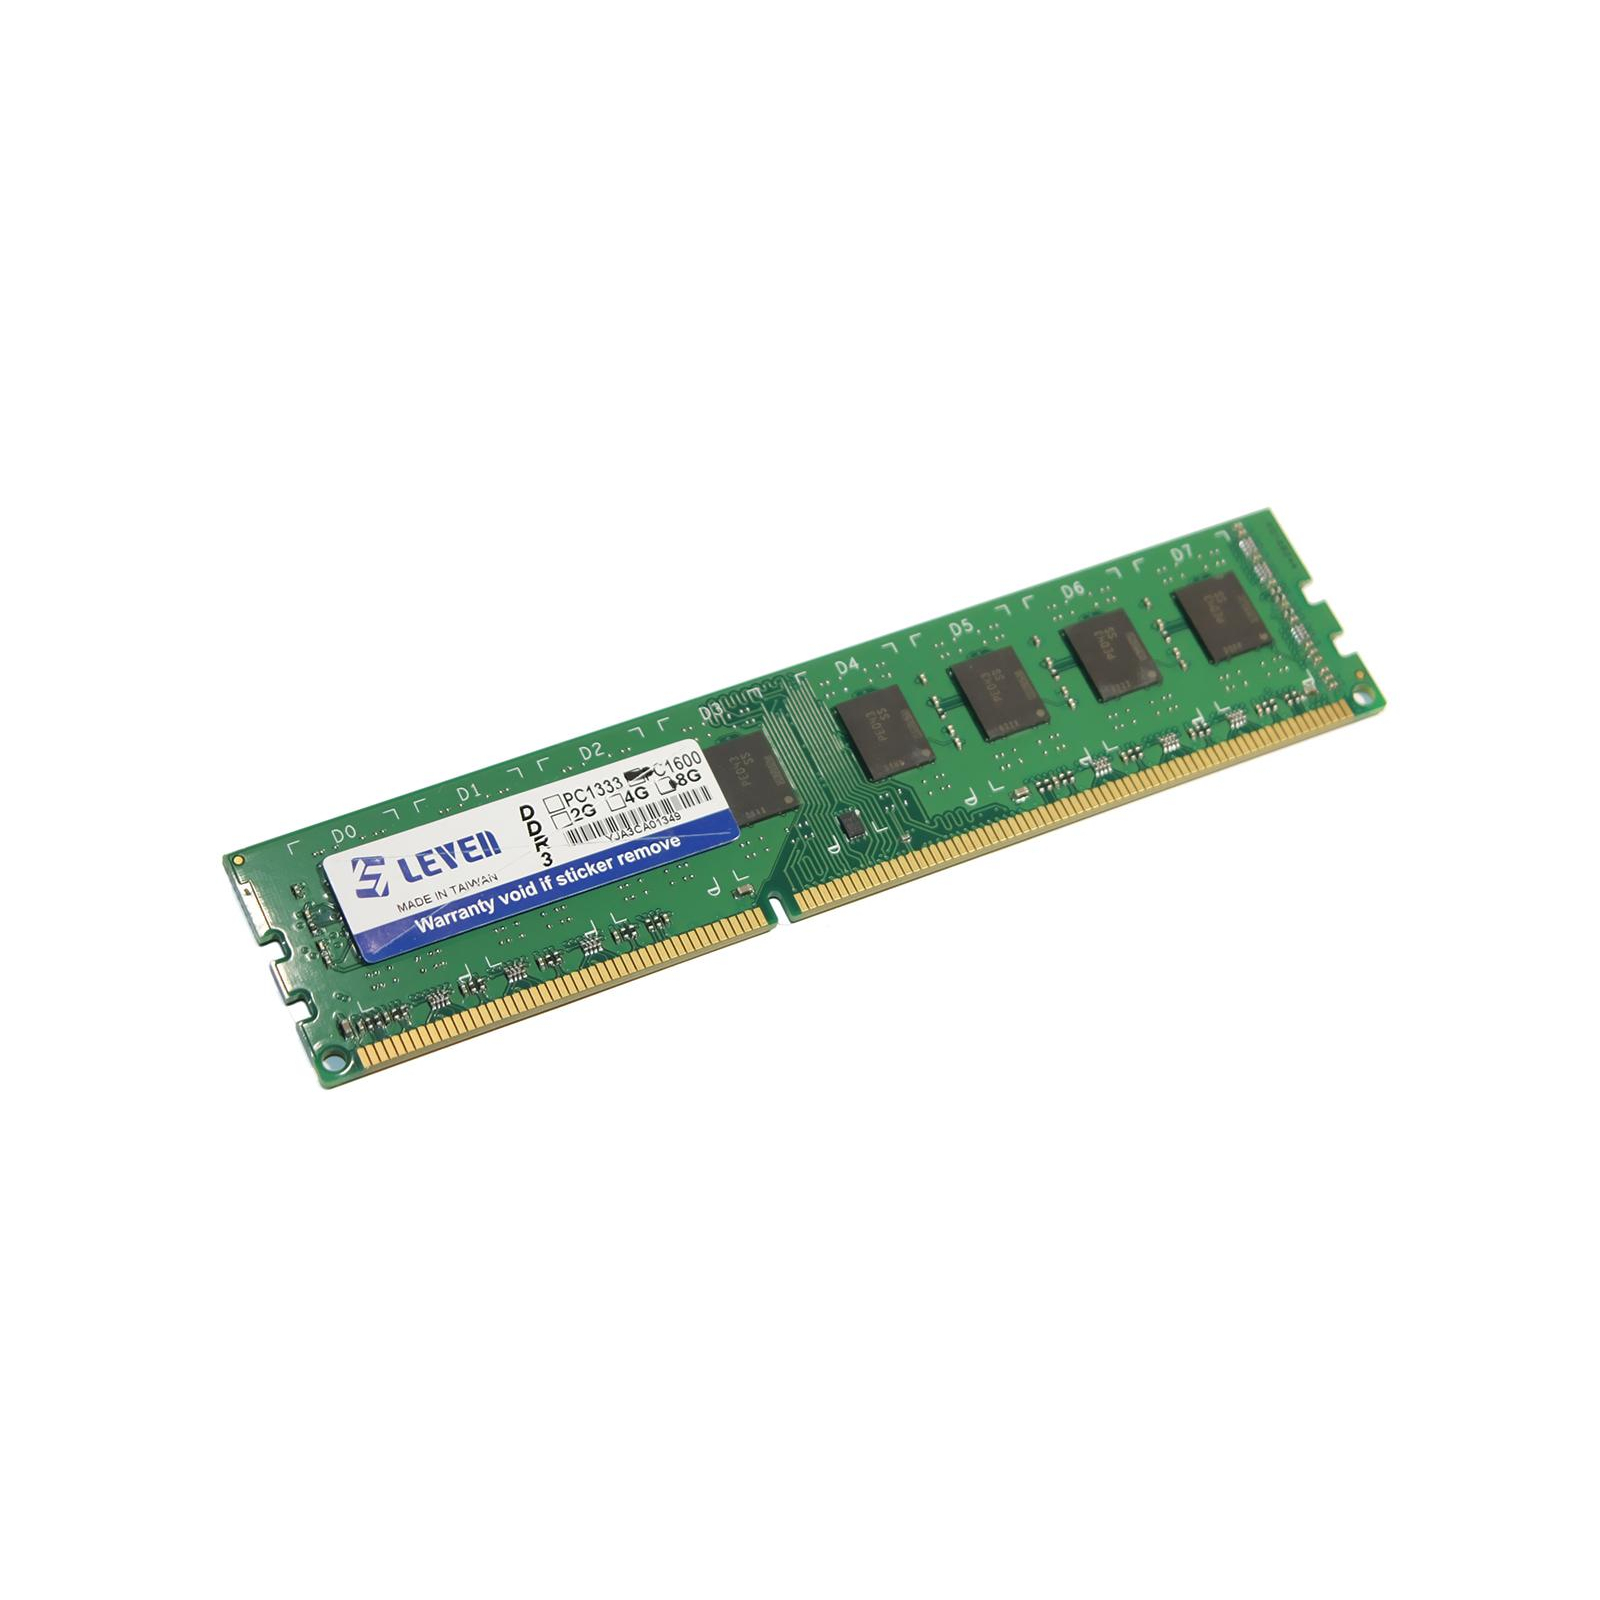 Модуль памяти для компьютера DDR3 4GB 1600 MHz LEVEN (JR3U1600172308-4M / JR3UL1600172308-4M)